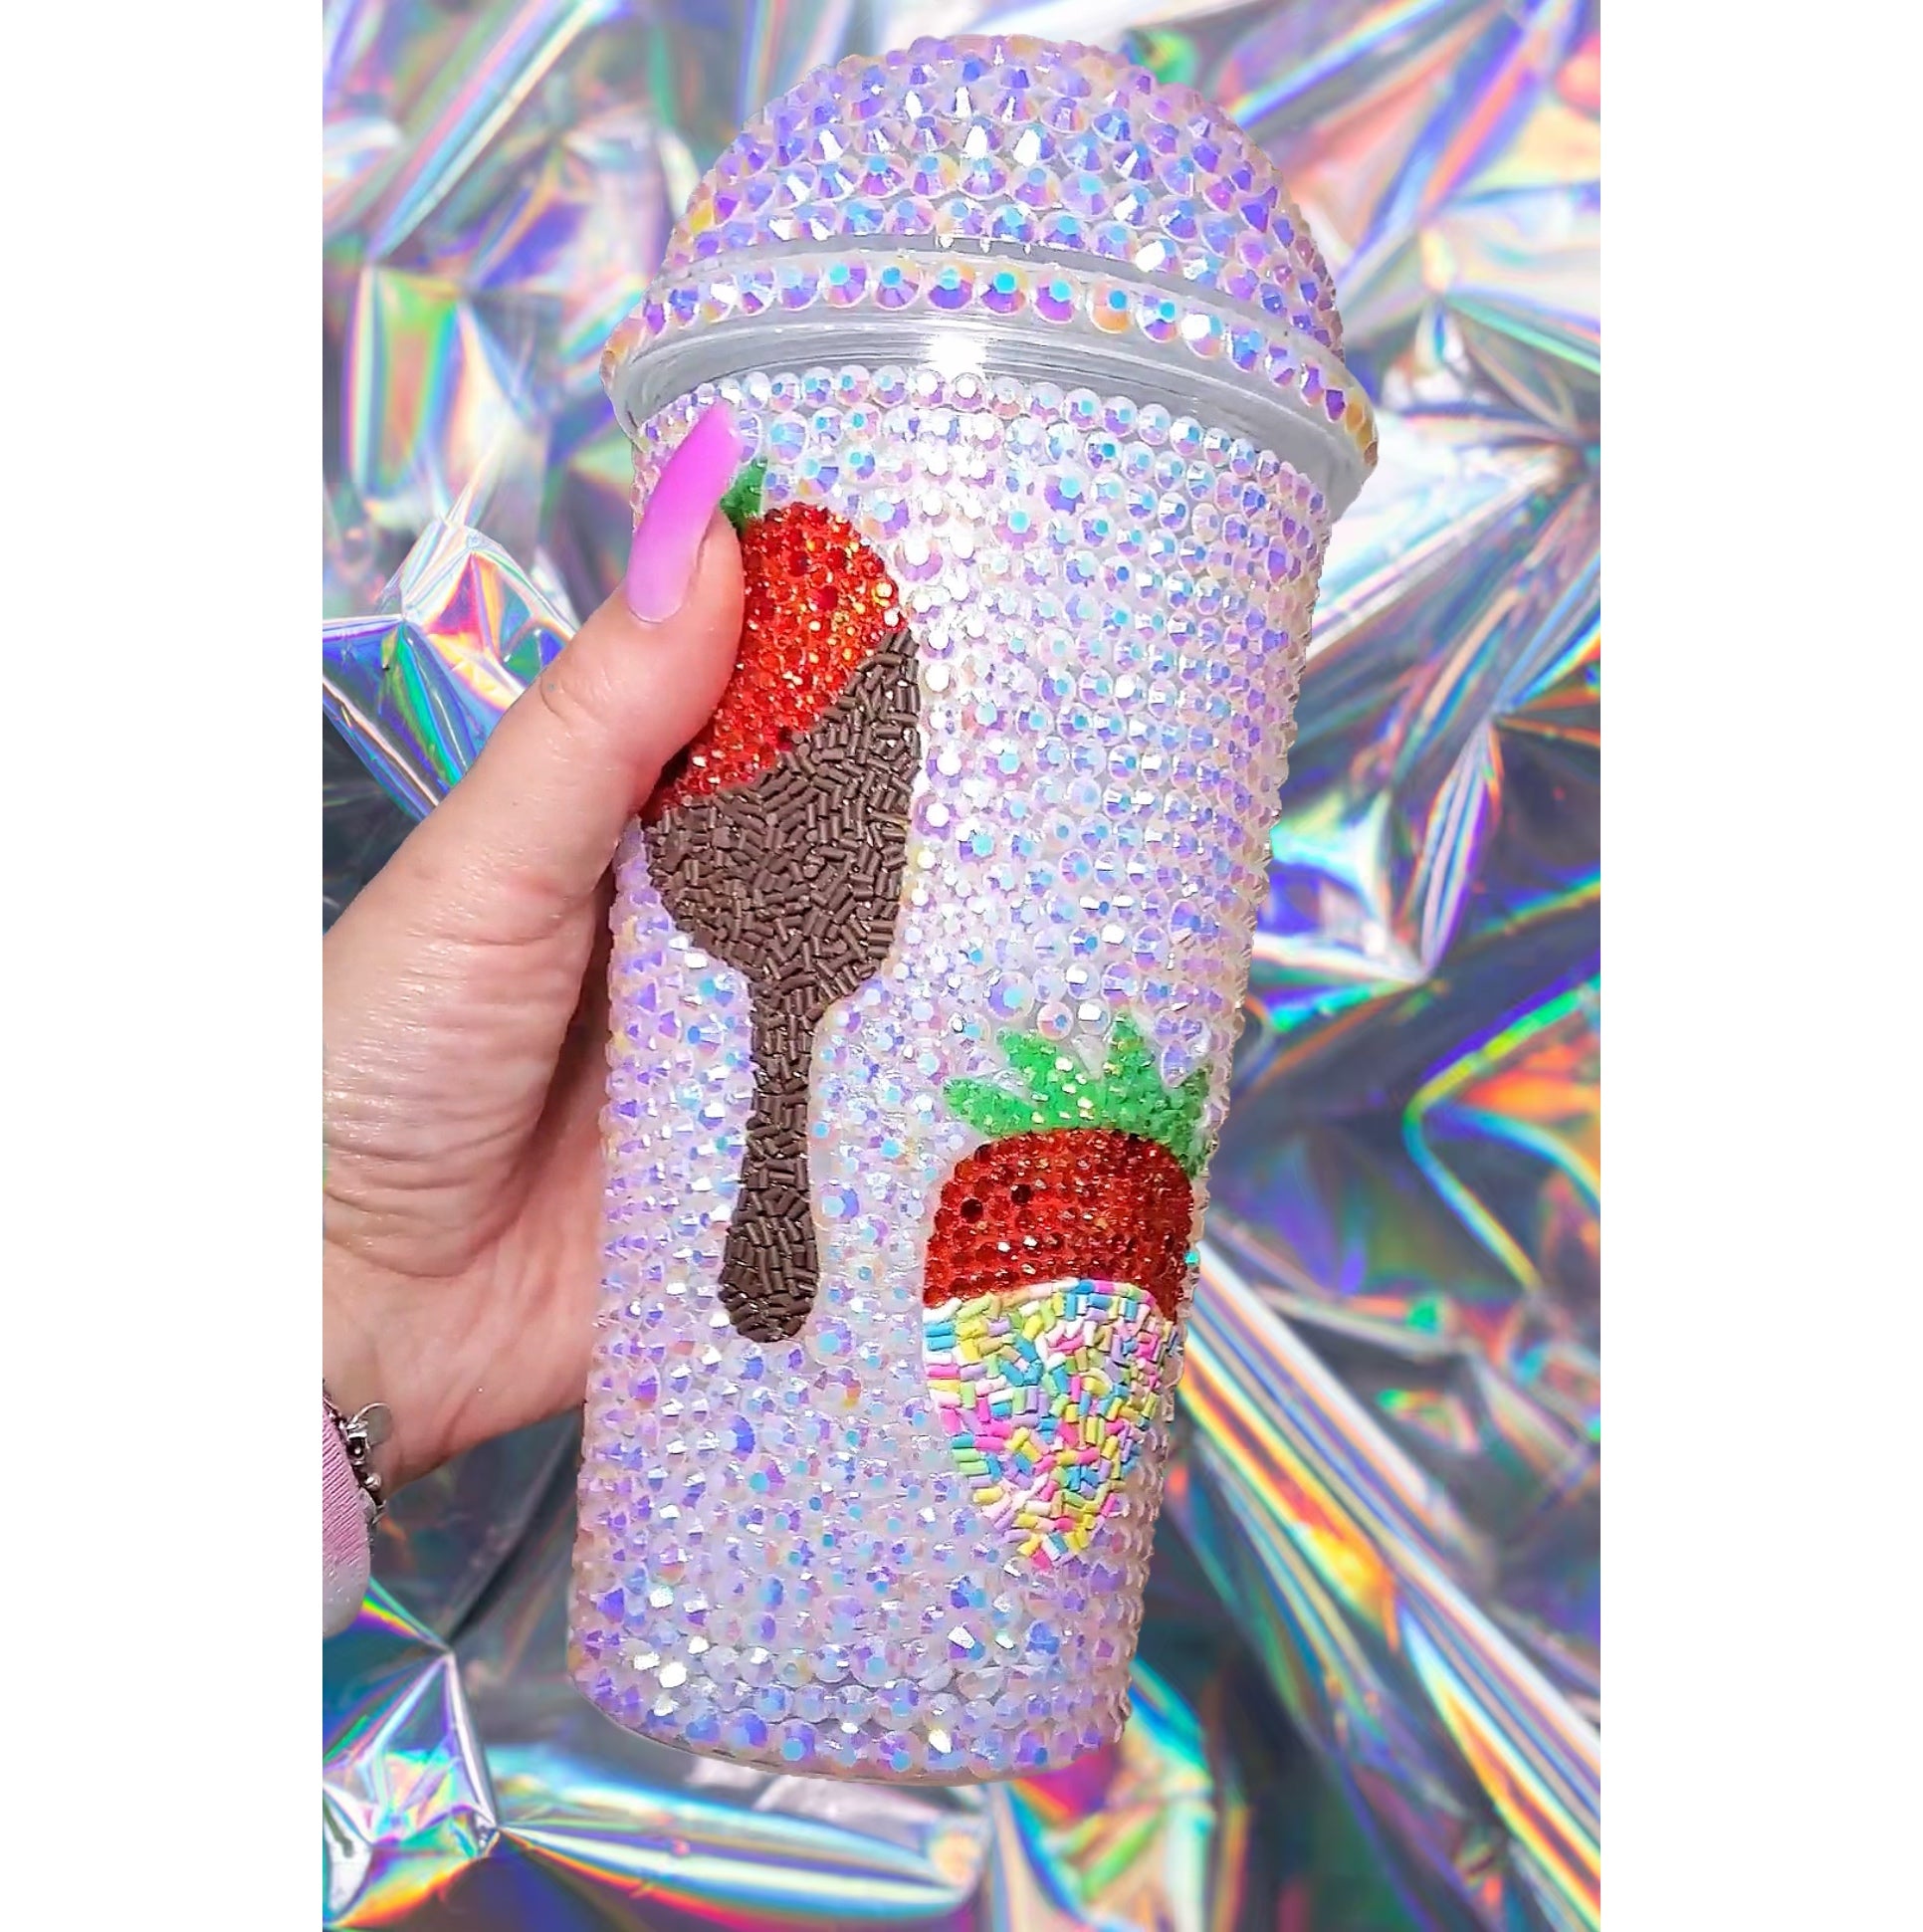 Chocolate/Rainbow Sprinkles covered Strawberries Design Glam Tumbler